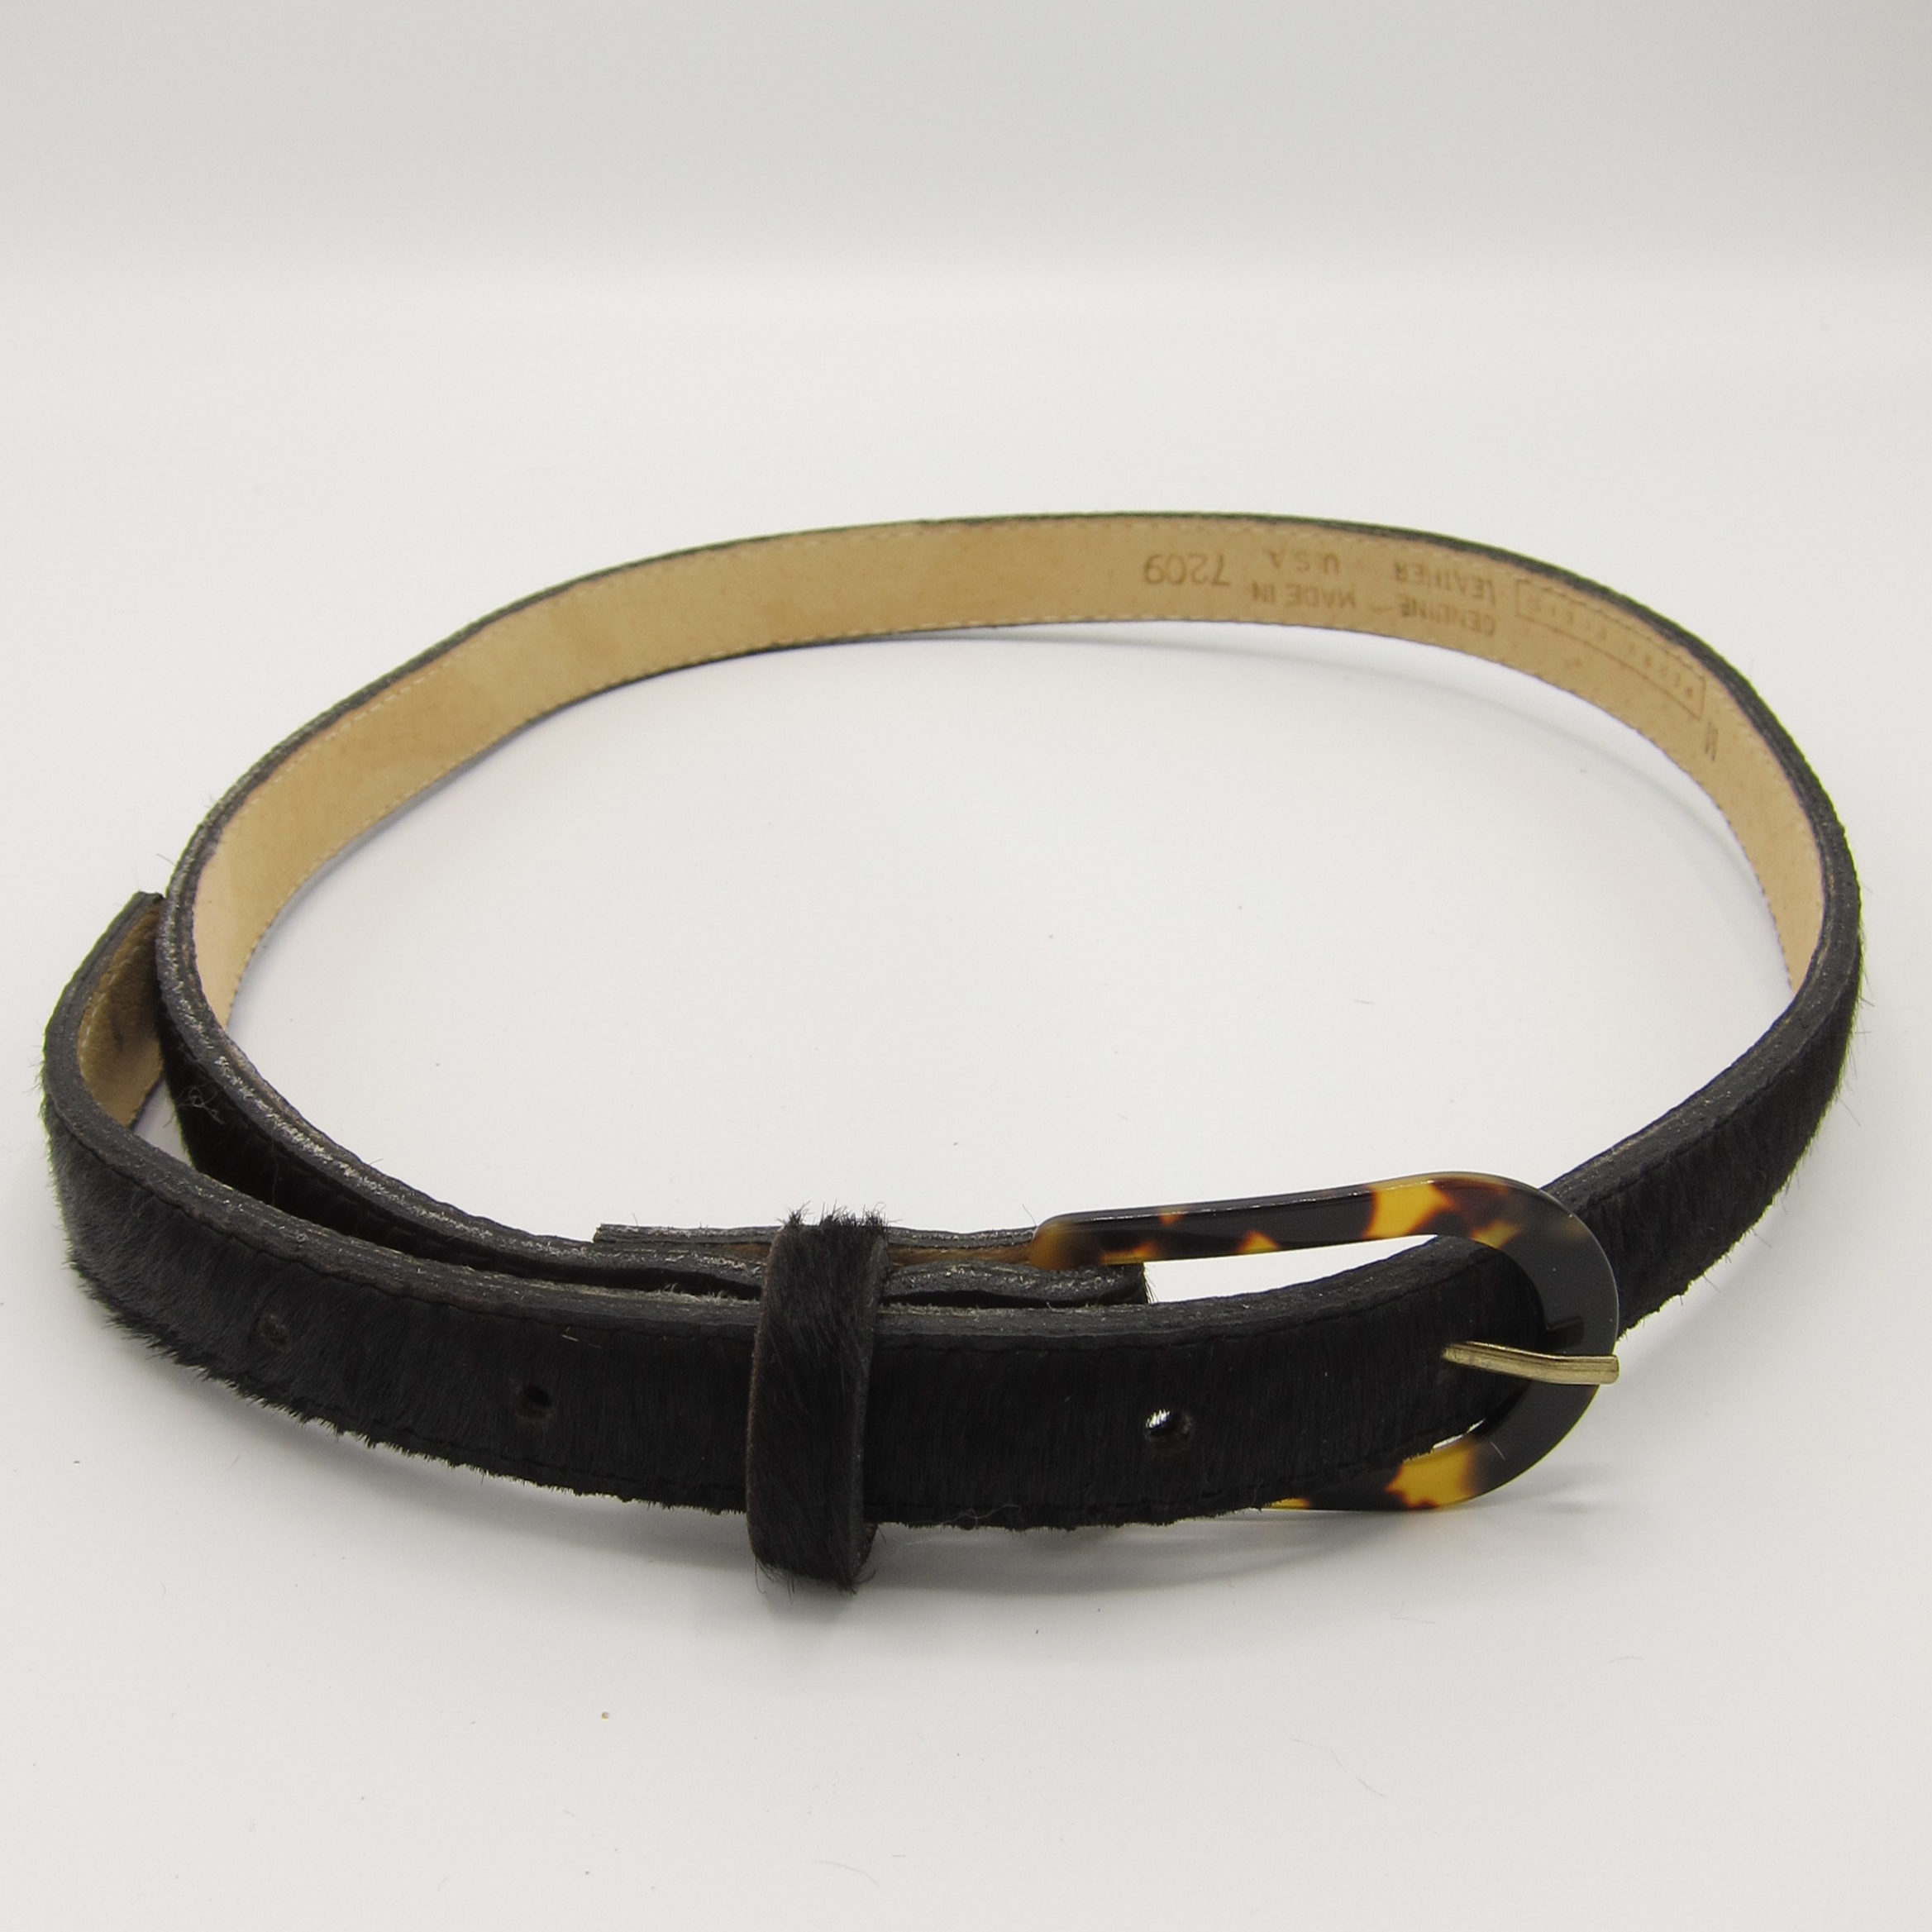 Tortoiseshell patent leather belt